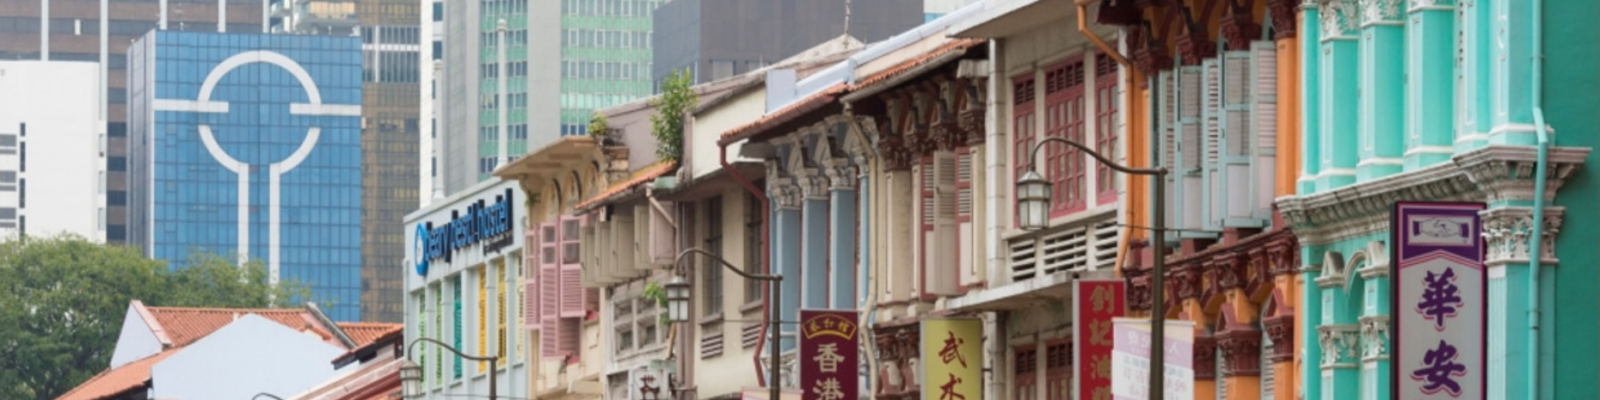 Singapore Chinatown DMC Services